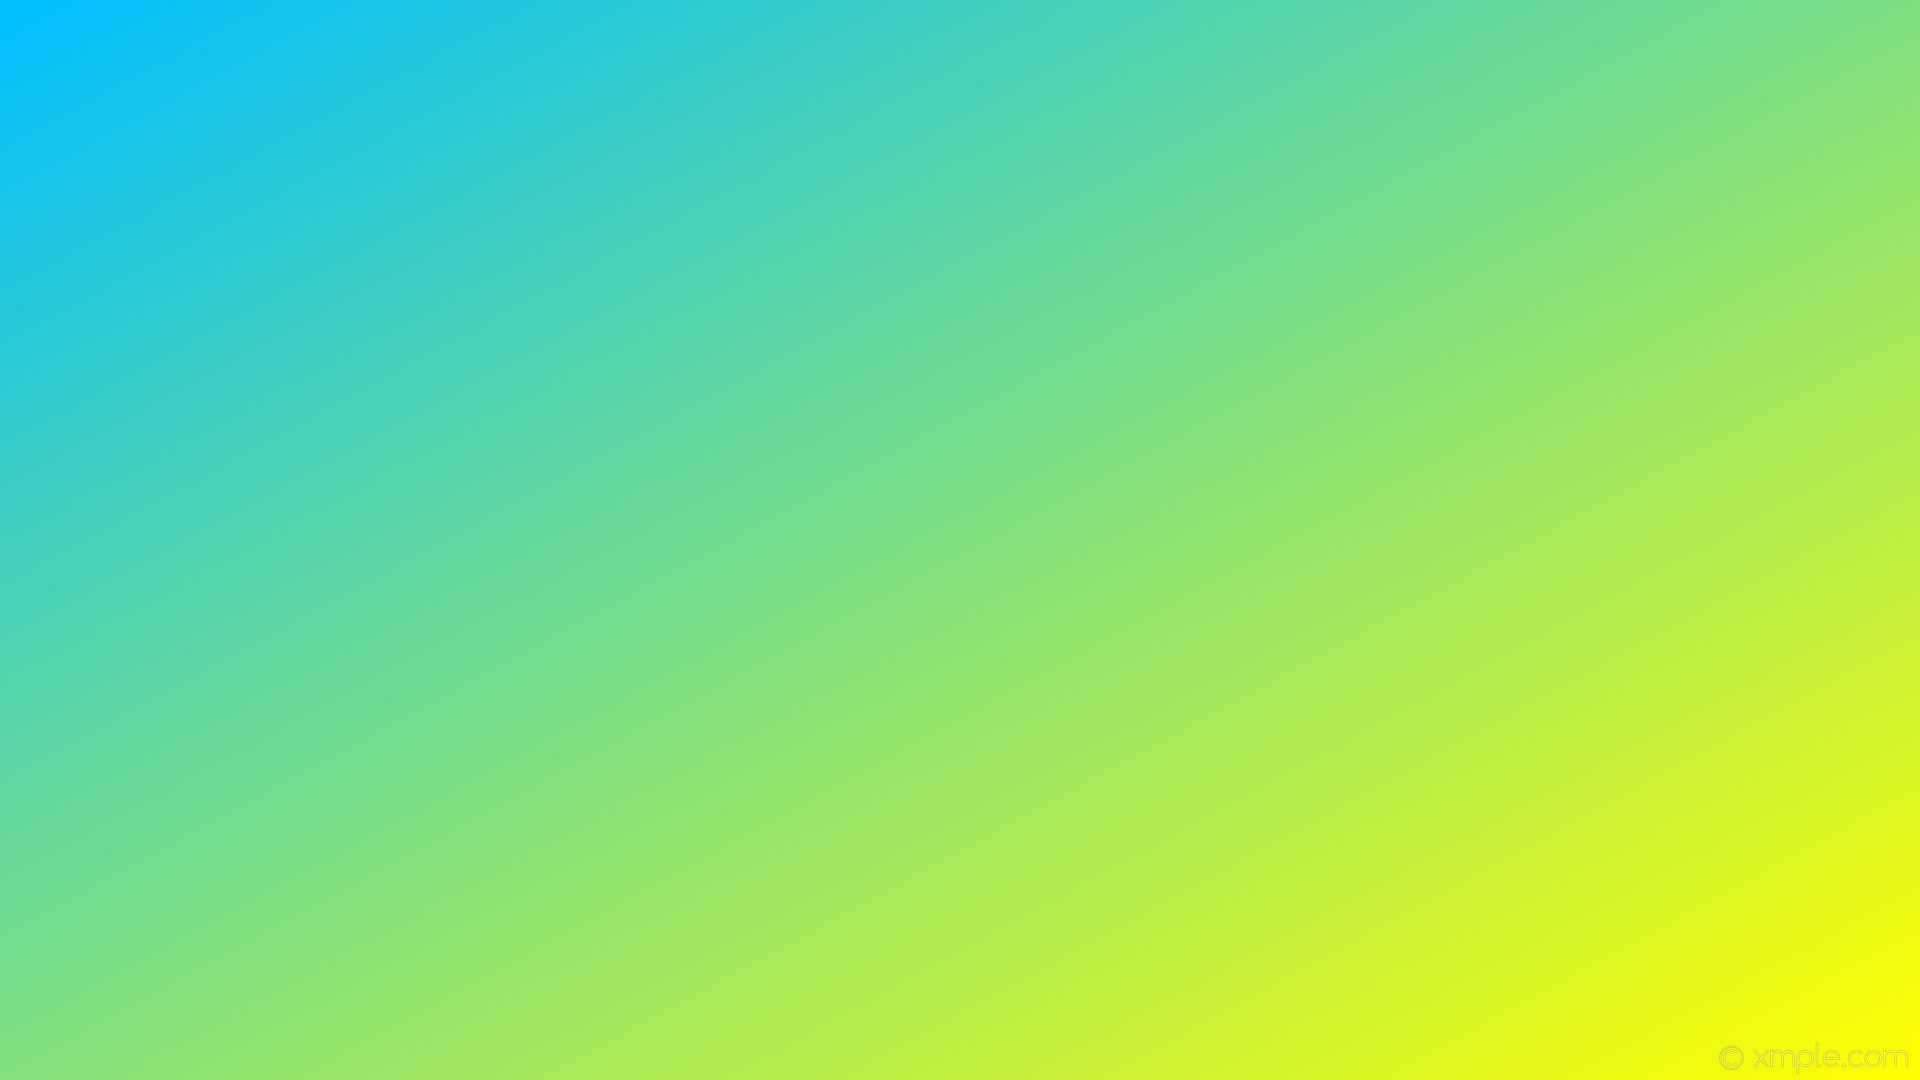 1920x1080 wallpaper gradient yellow blue linear deep sky blue #ffff00 #00bfff 330Â°